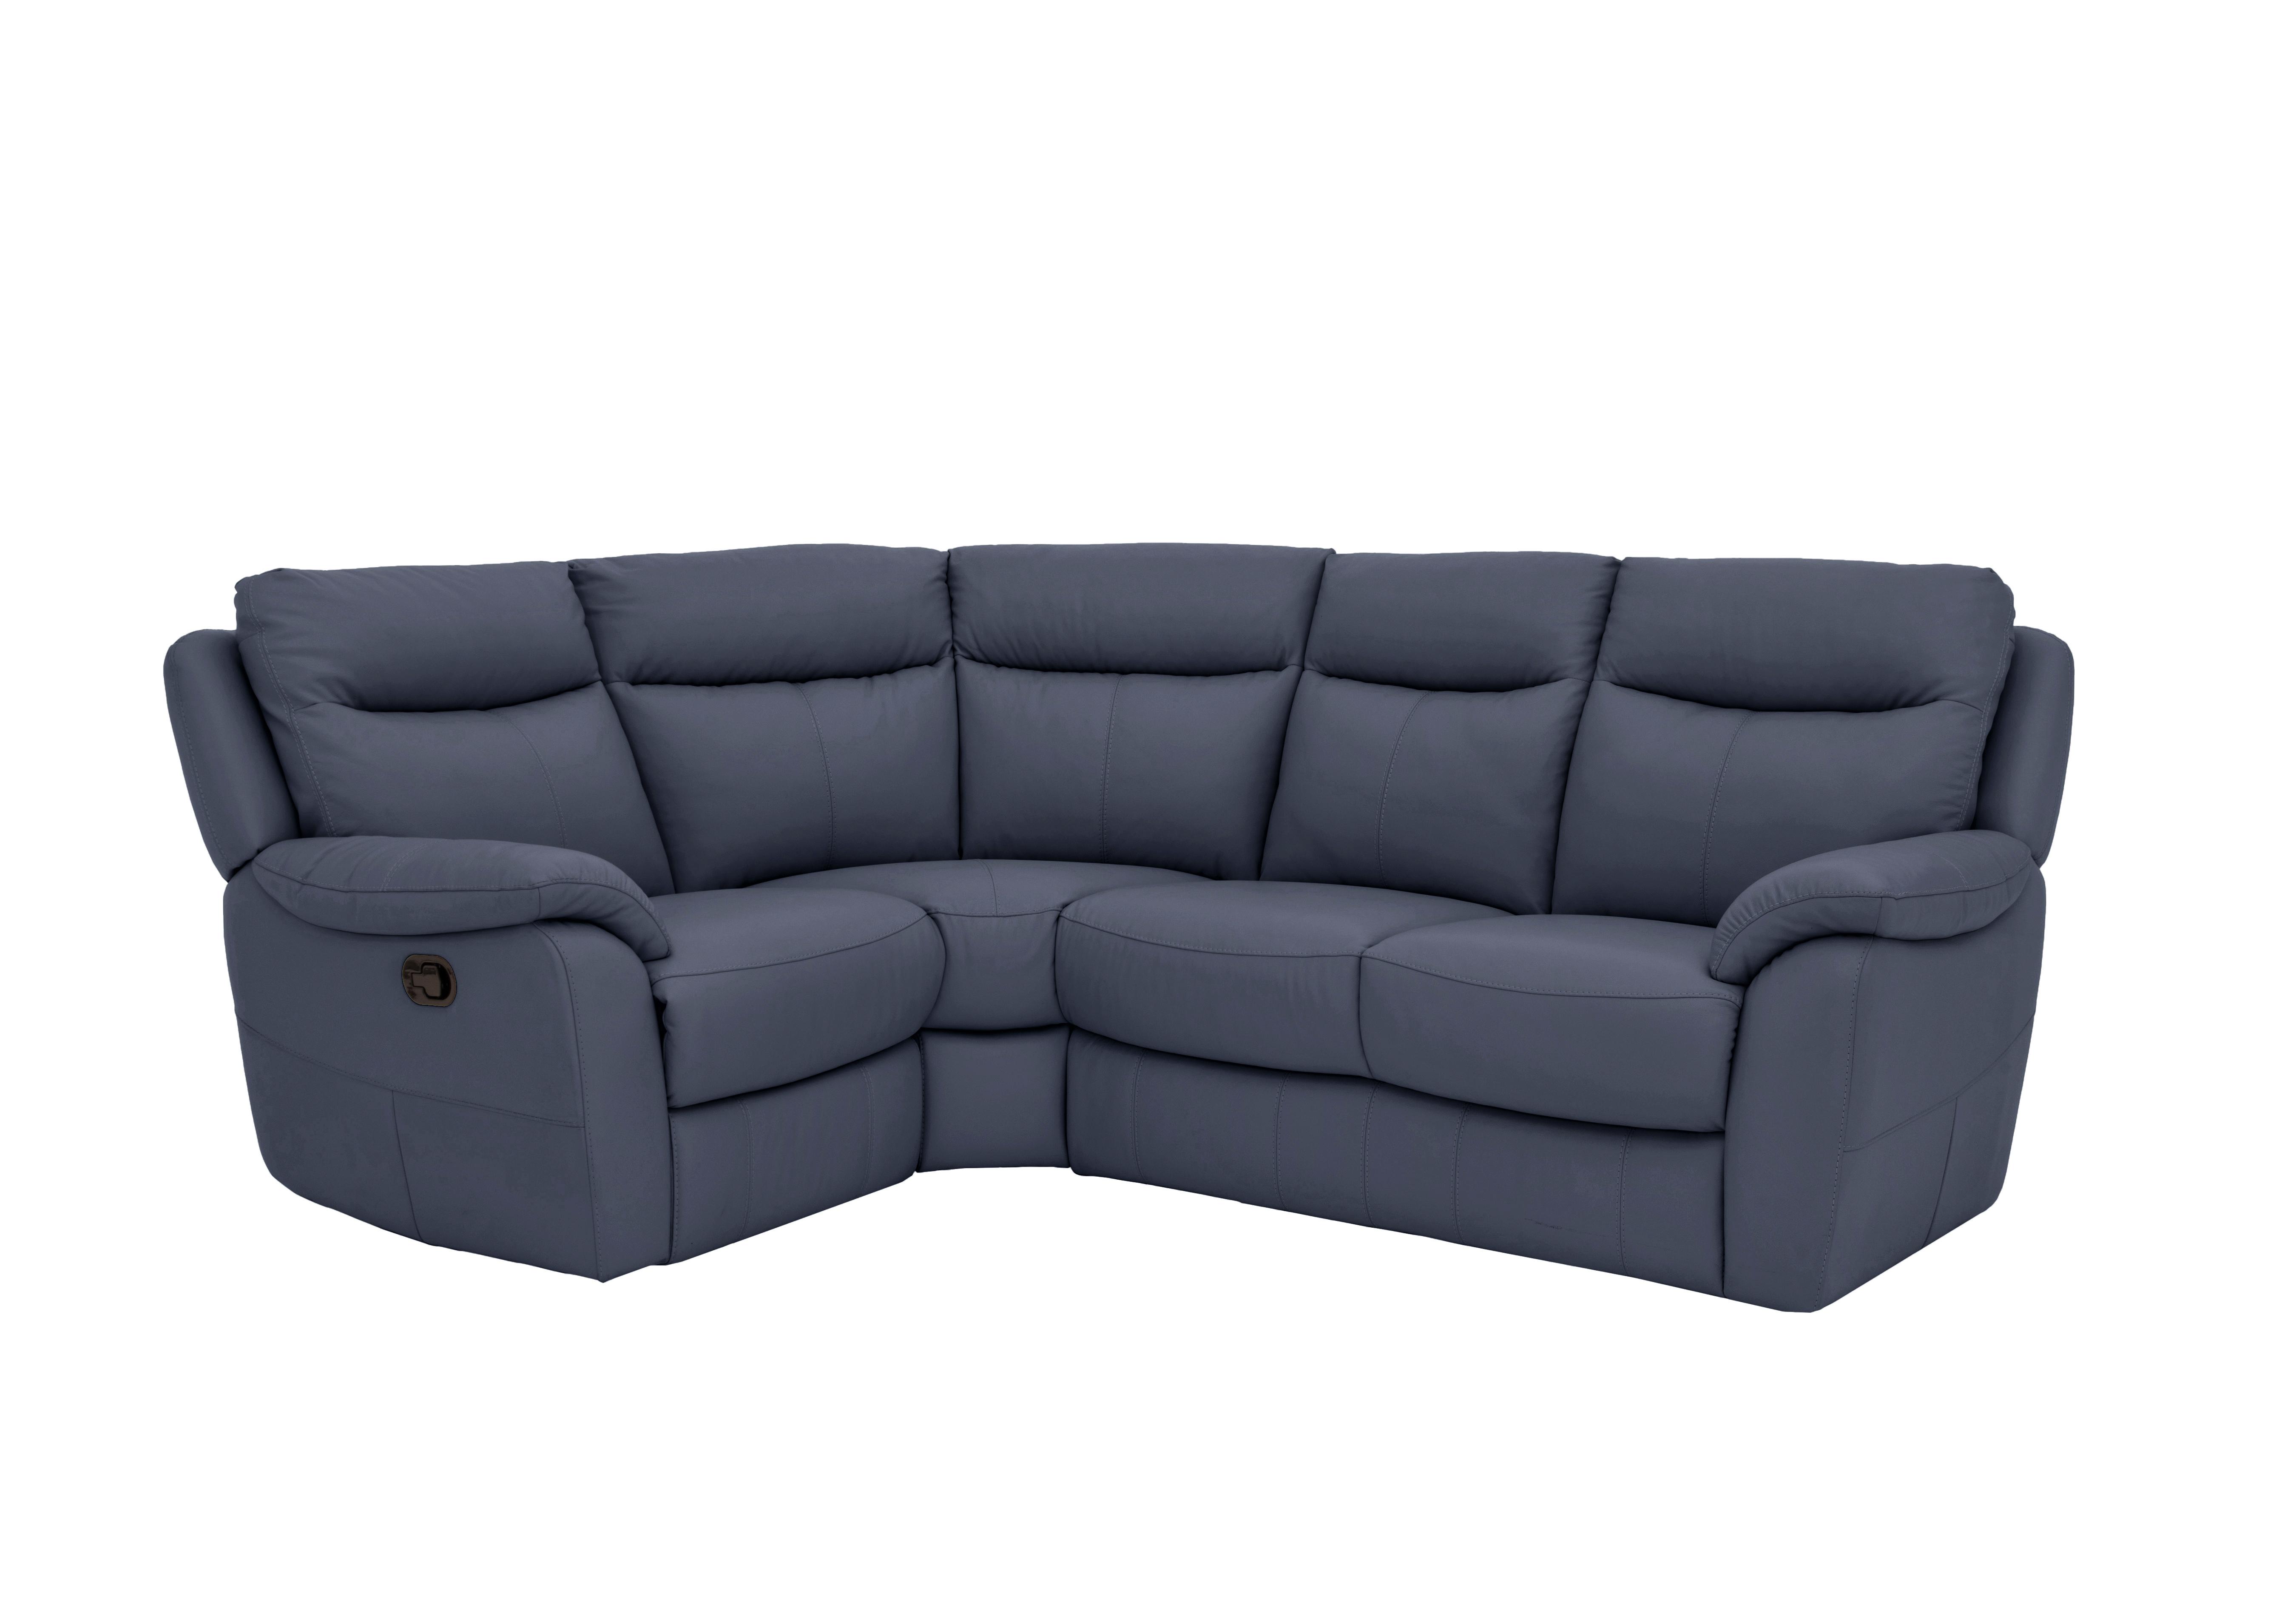 Snug Compact Leather Corner Sofa in Bv-313e Ocean Blue on Furniture Village